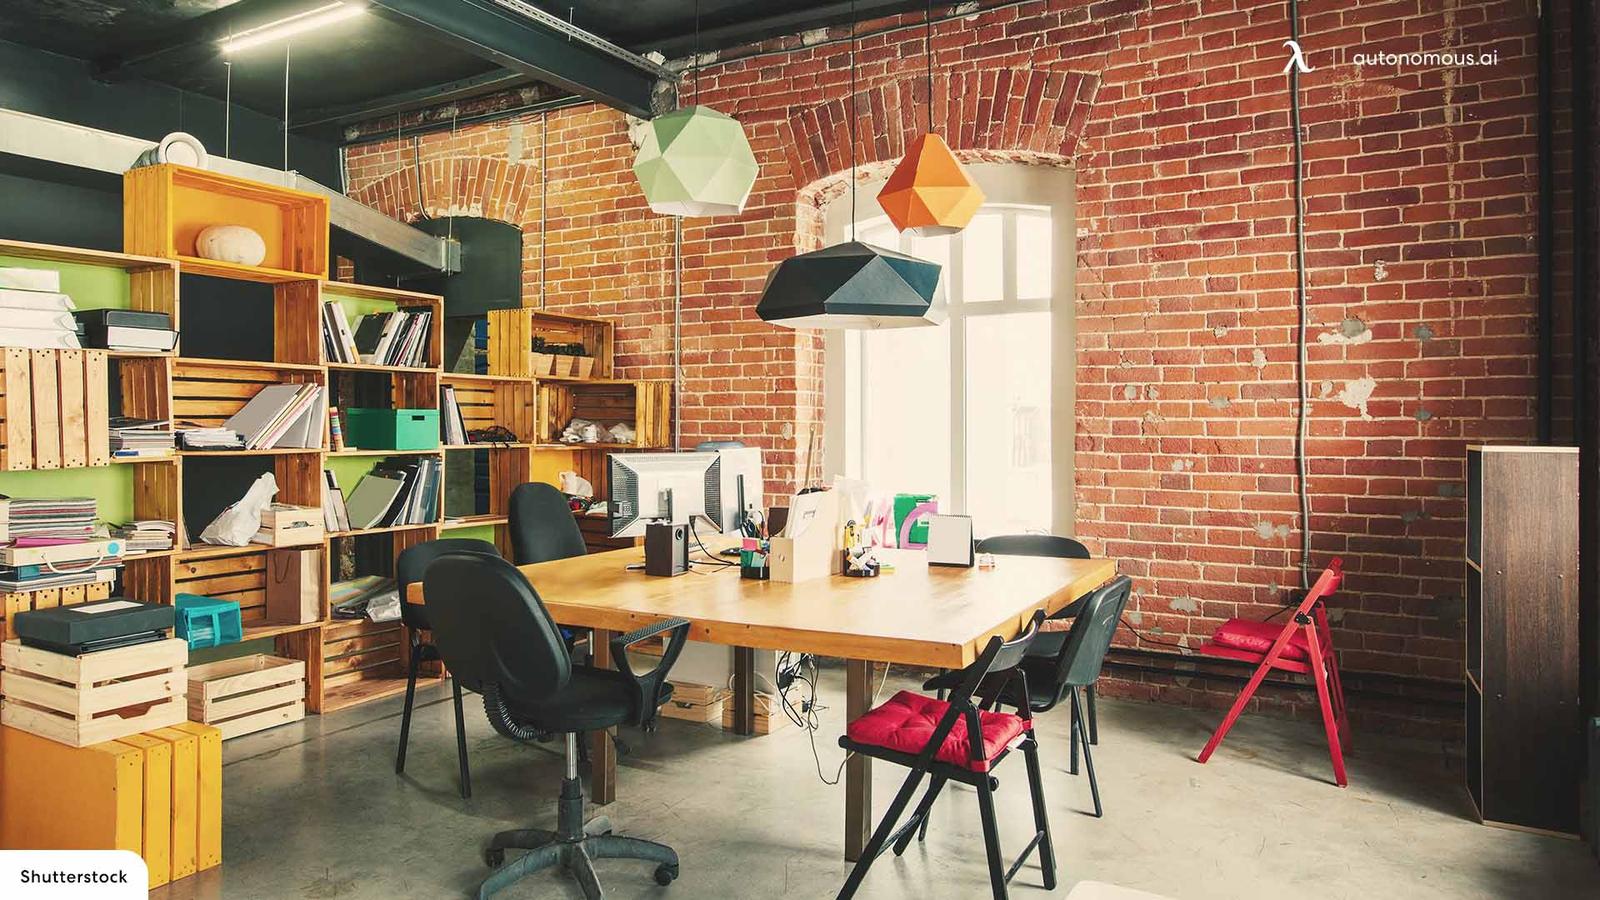 Steps to Build A Creative Hub Studio at Home